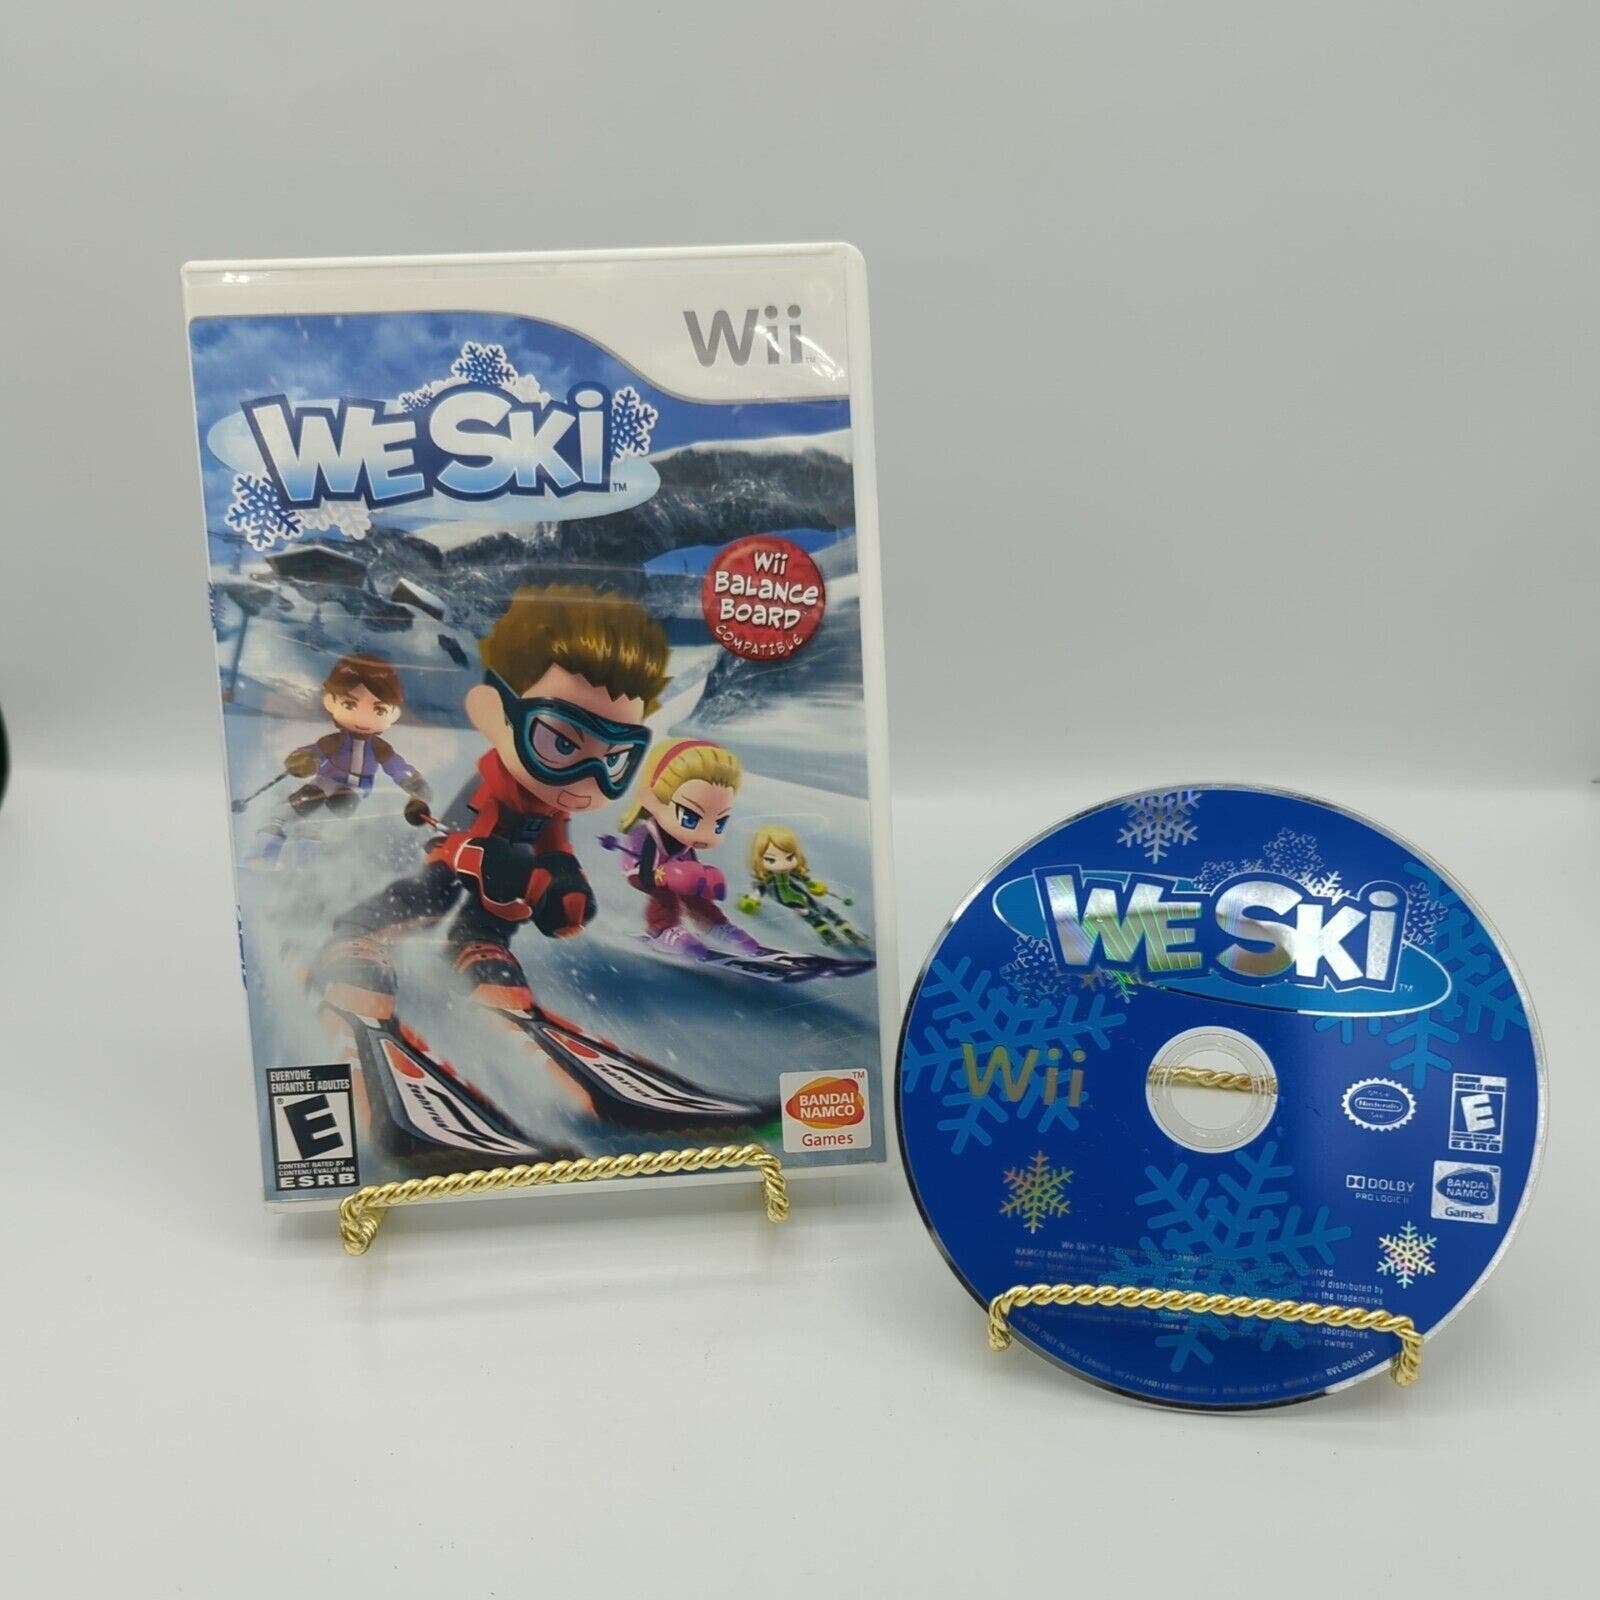 Wii SKI NINTENDO Wii SKI SNOWBOARD 2008 Complete W/CASE MANUAL GREAT CONDITION - £9.42 GBP